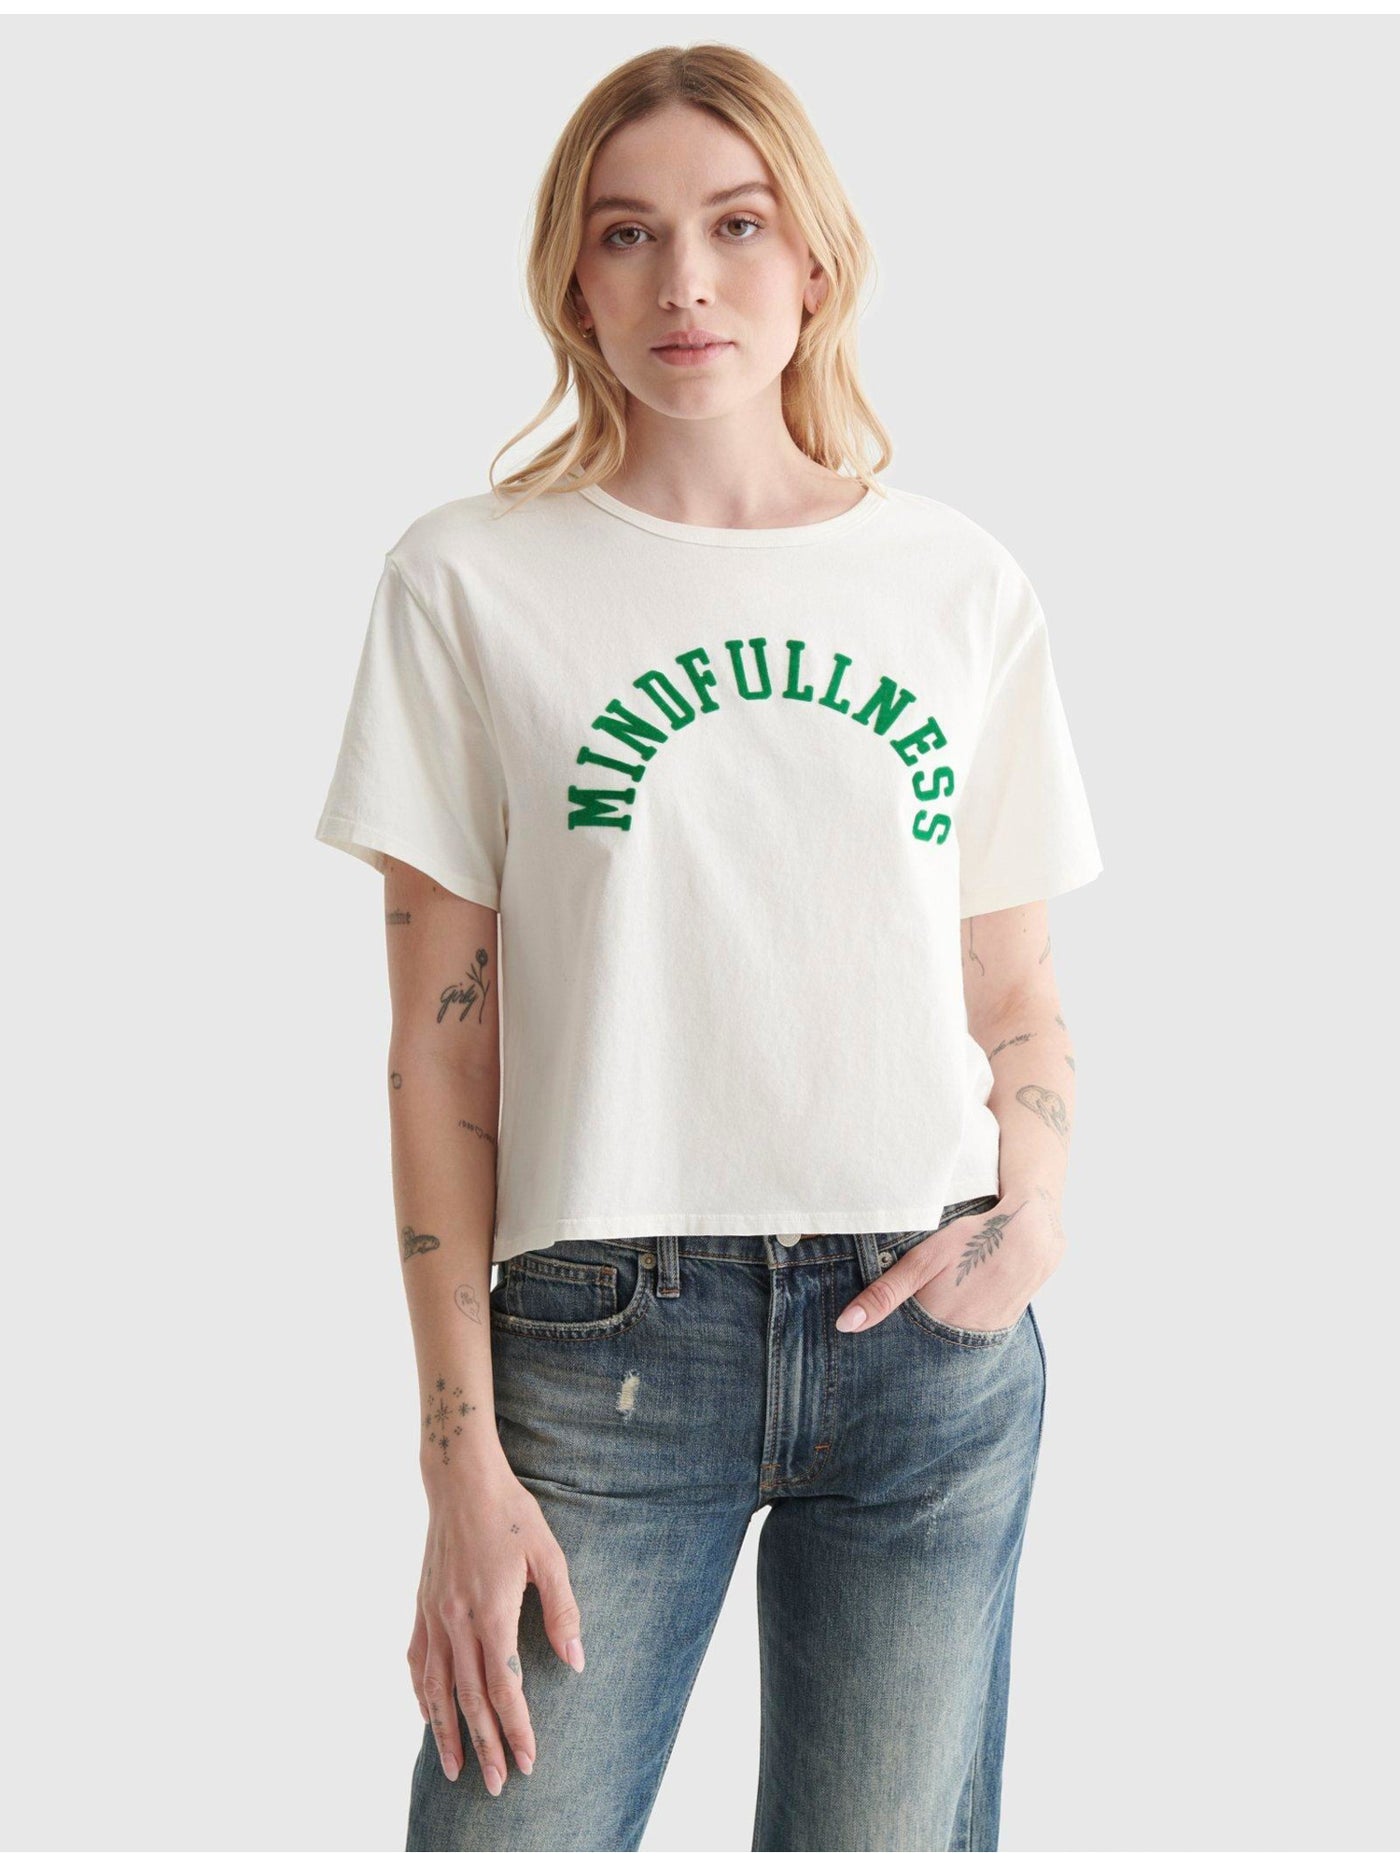 LUCKY BRAND Womens White Graphic Short Sleeve Crew Neck T-Shirt S